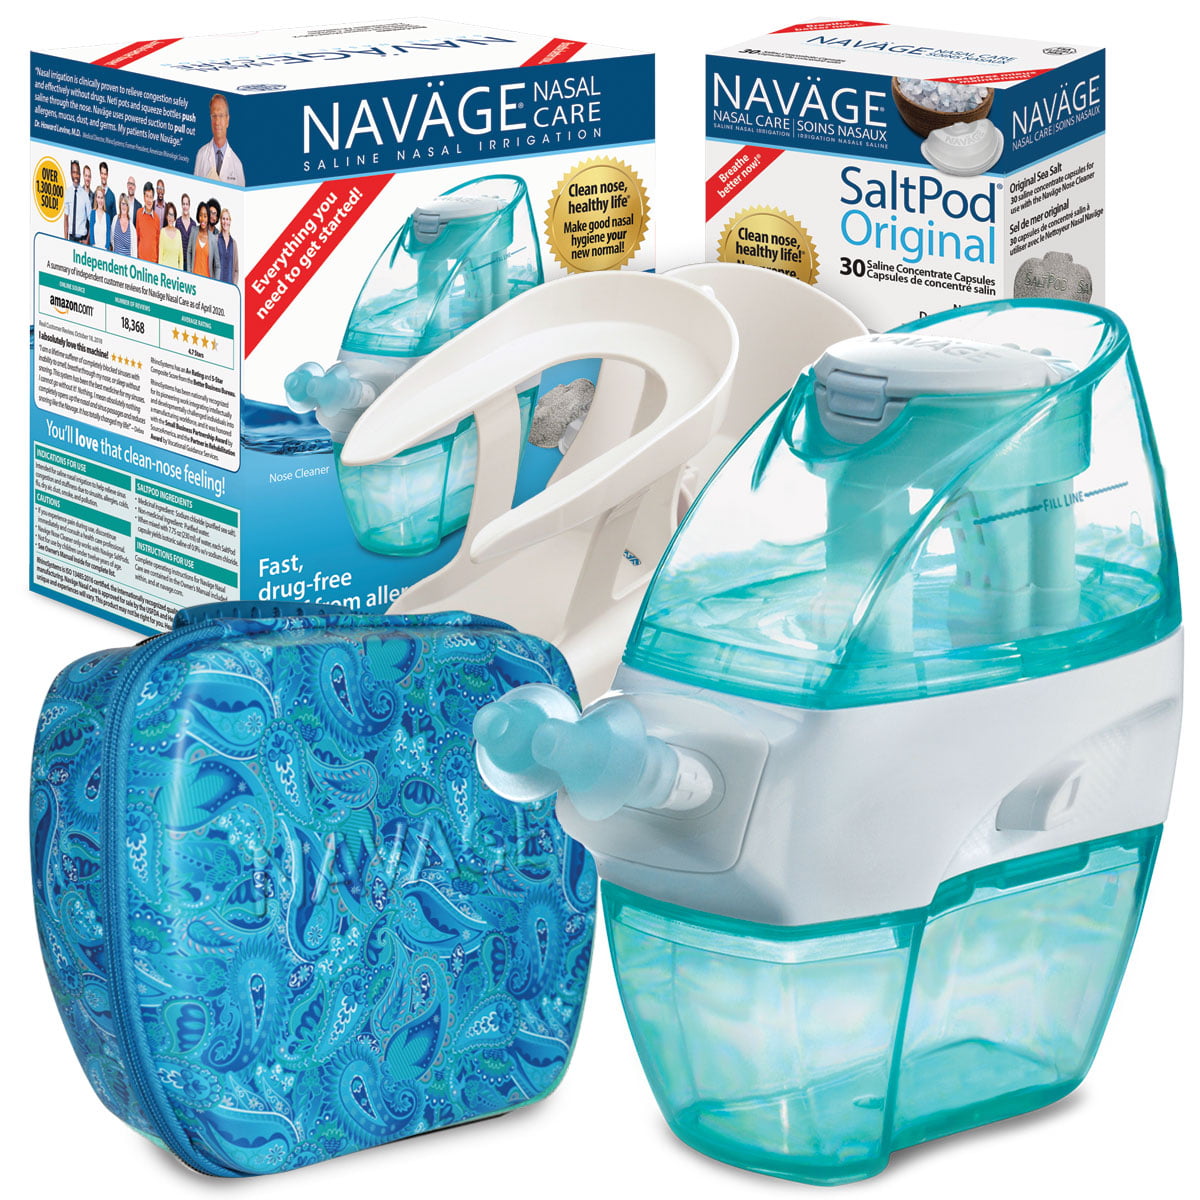 Navage Nasal Irrigation The Deluxe Bundle Navage Nose Cleaner, 50 SaltPod Capsules, Countertop